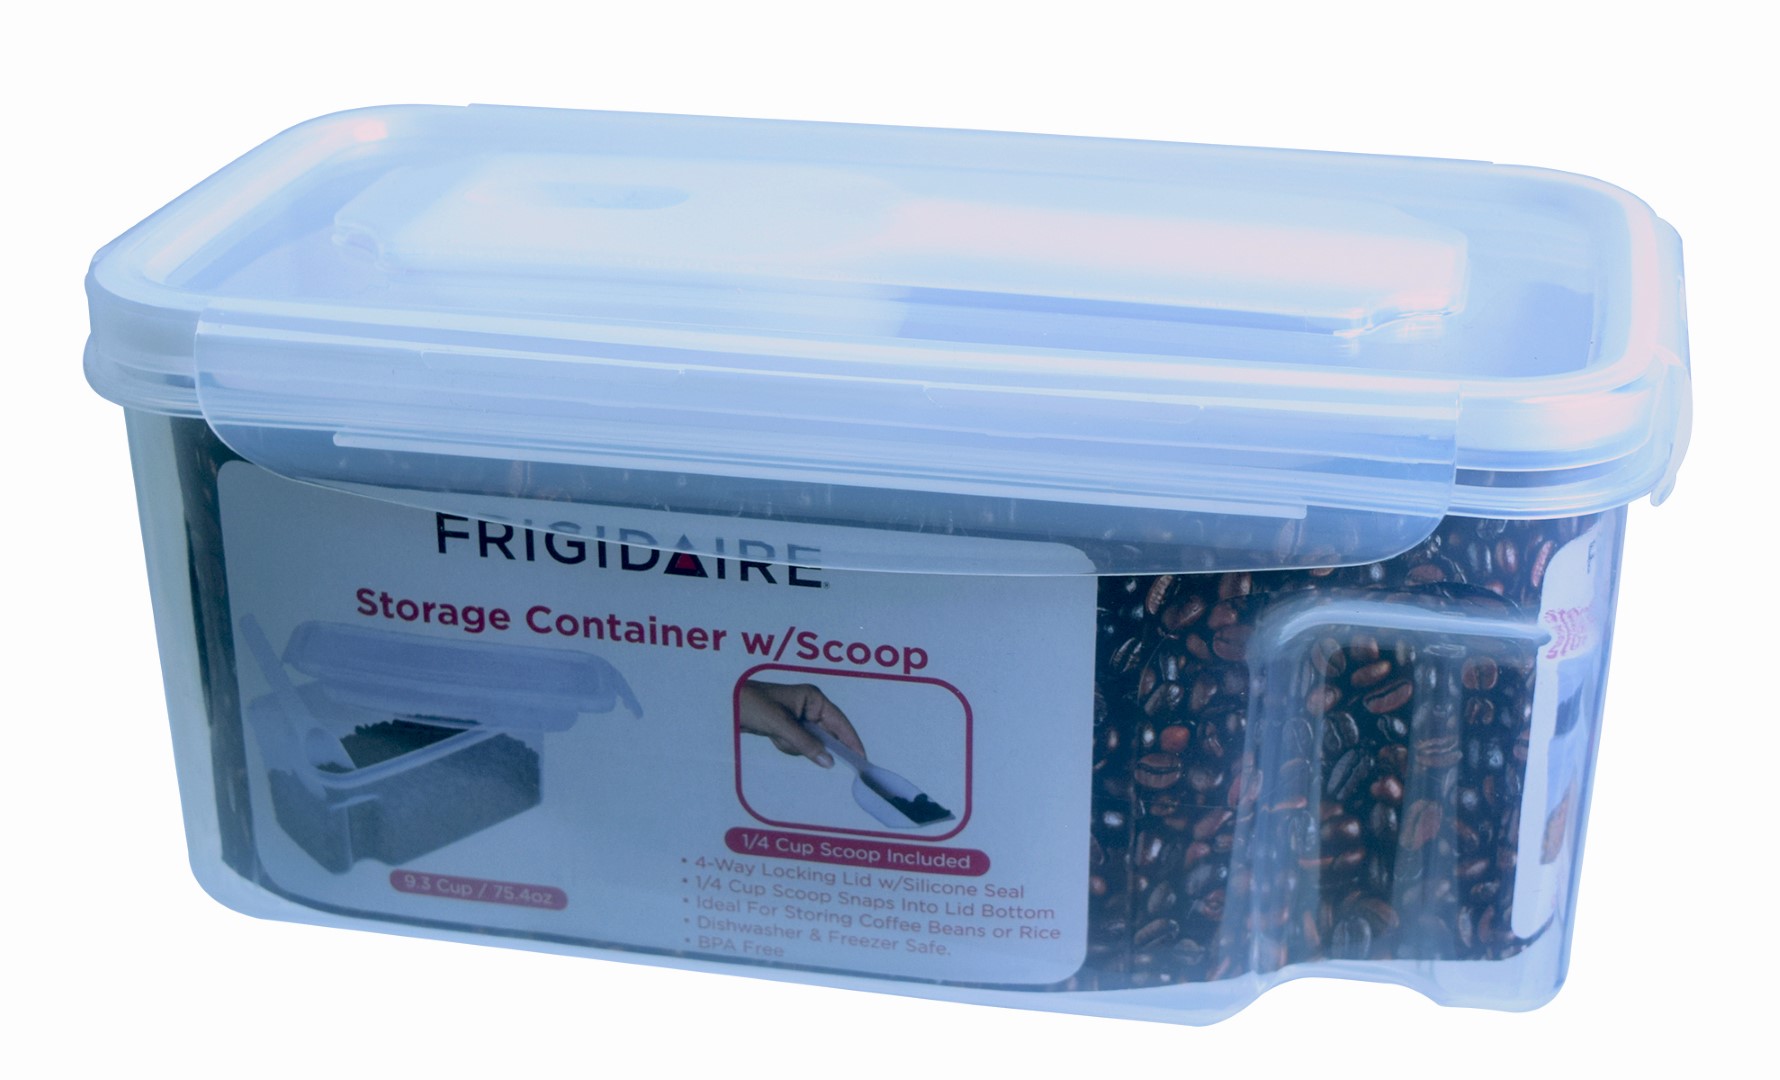 Fridgemate Storage Container With Scoop 195 oz